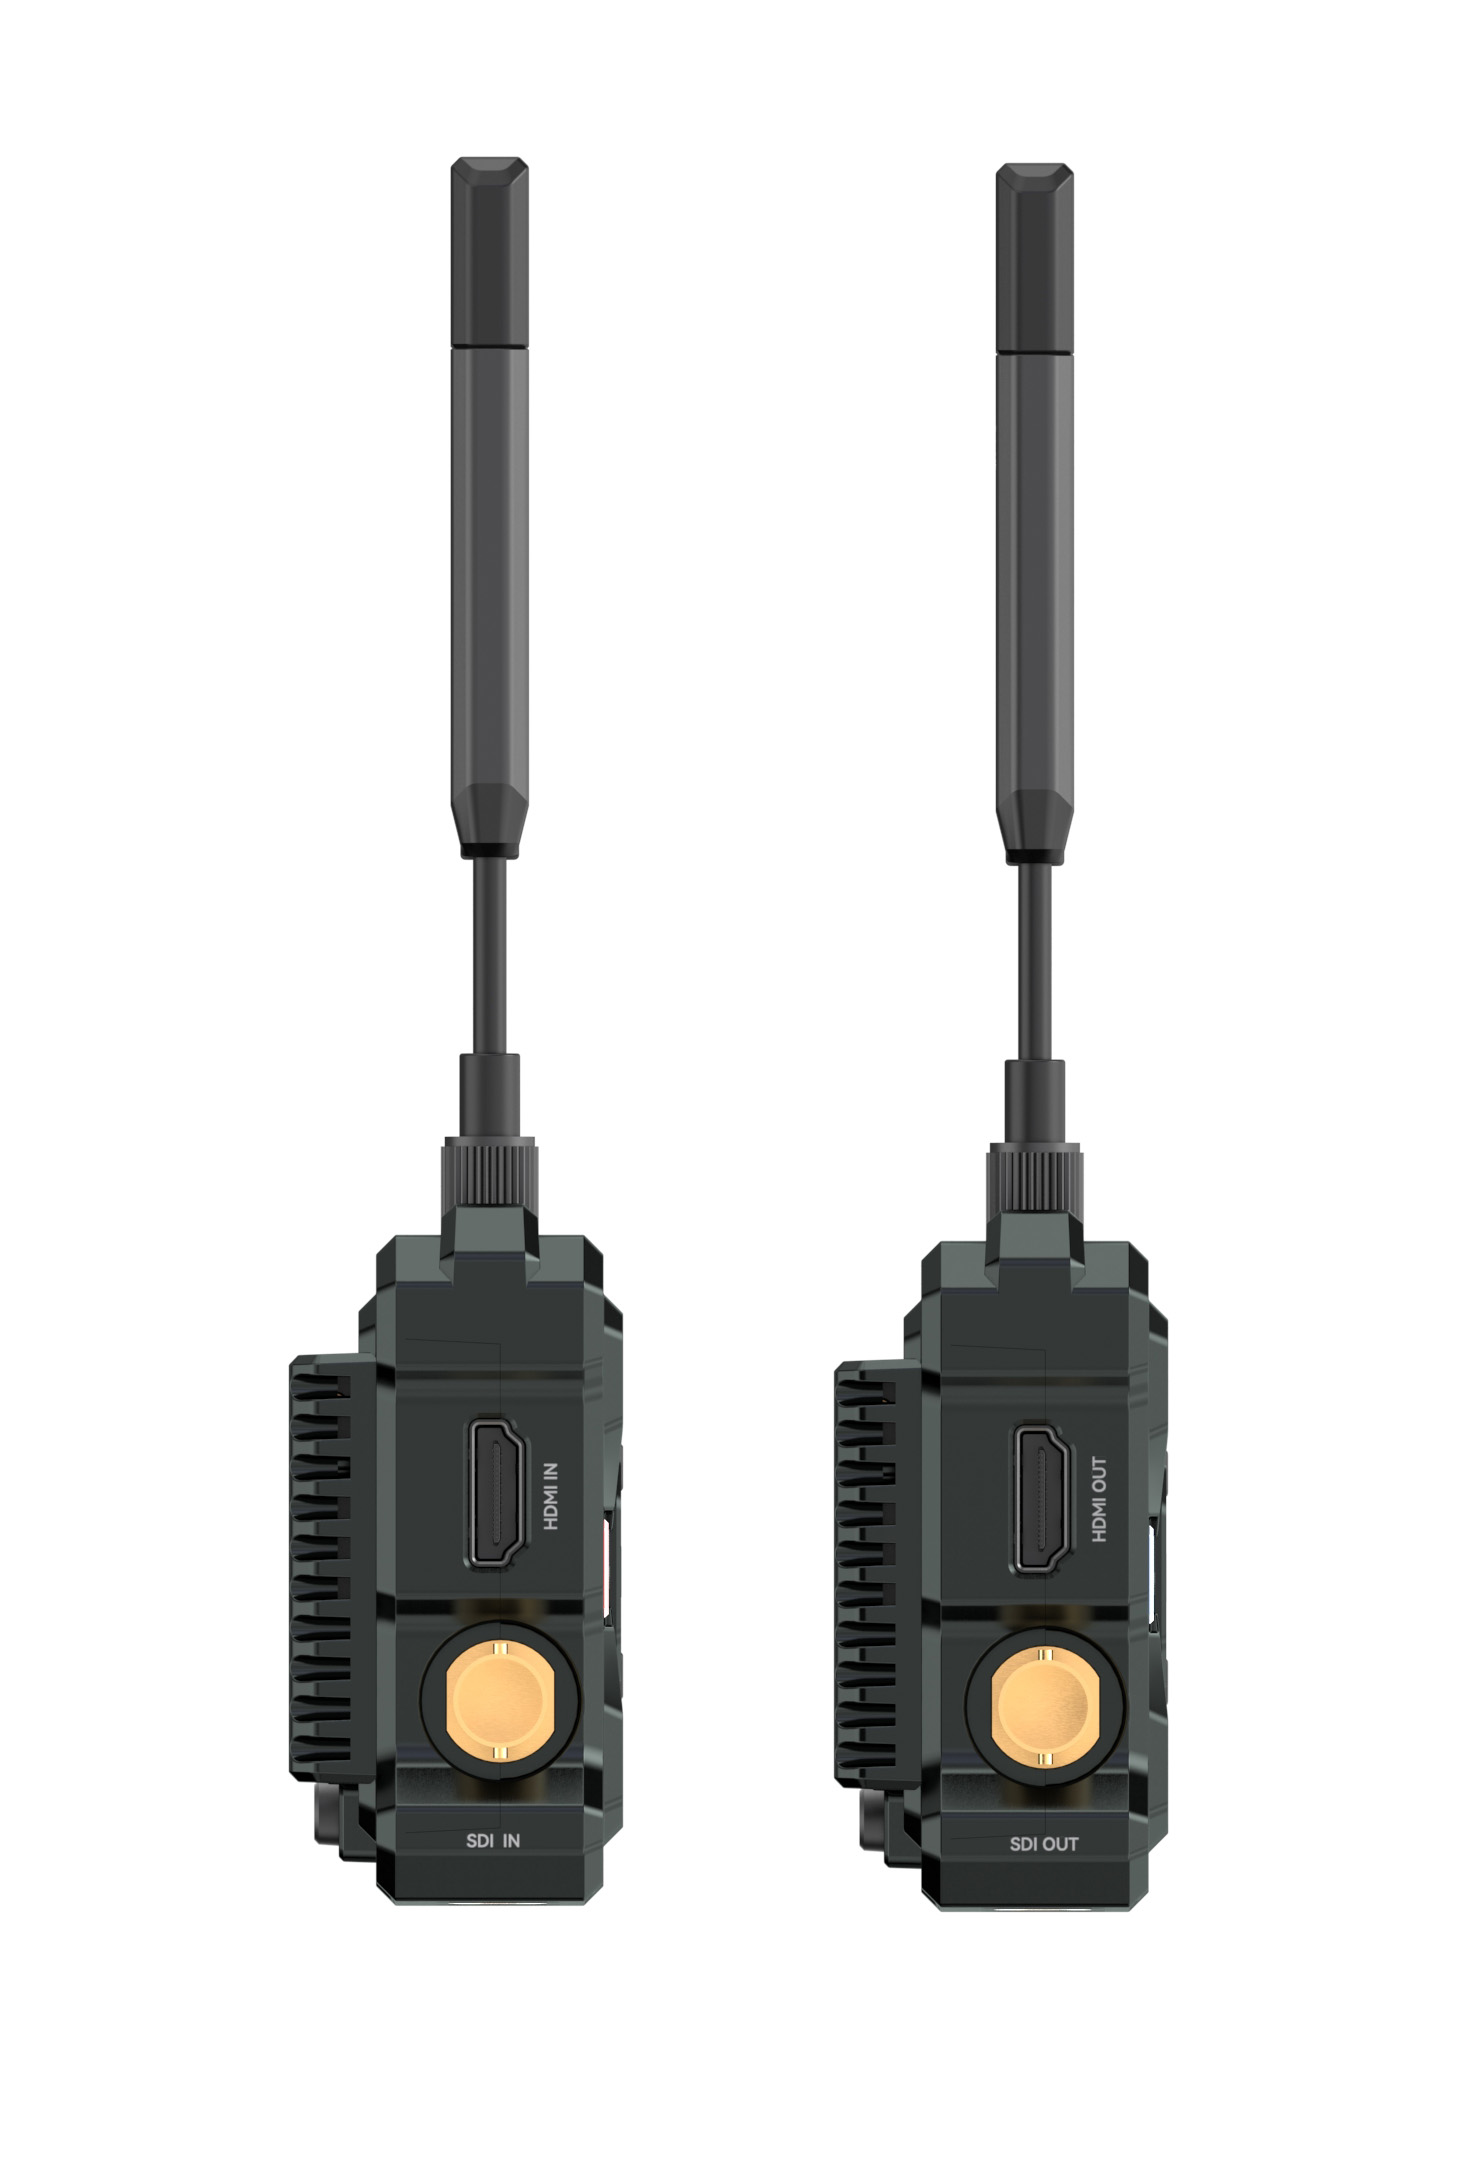 Hollyland Pyro S อุปกรณ์ส่งสัญญาณภาพและเสียงไร้สาย ความถี่ 2.4GHz & 5GHz Dual-Band HDMI และ SDI ราคา 22500 บาท